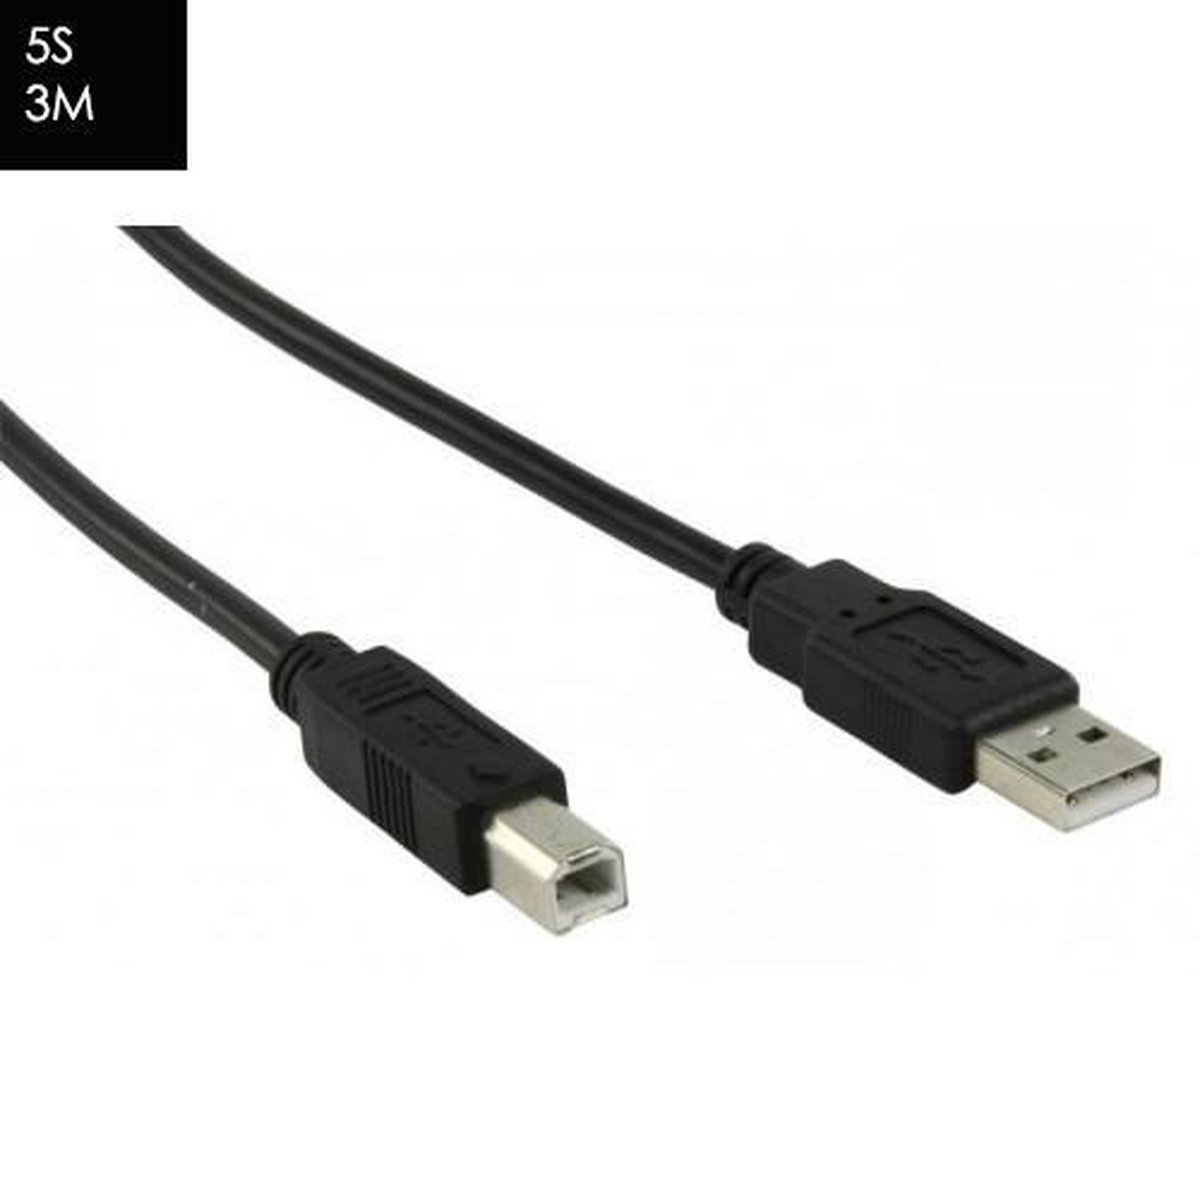 Printer kabel |Printer usb 2.0 Kabel 3 meter 5S |Universeel kabel voor  printers | bol.com